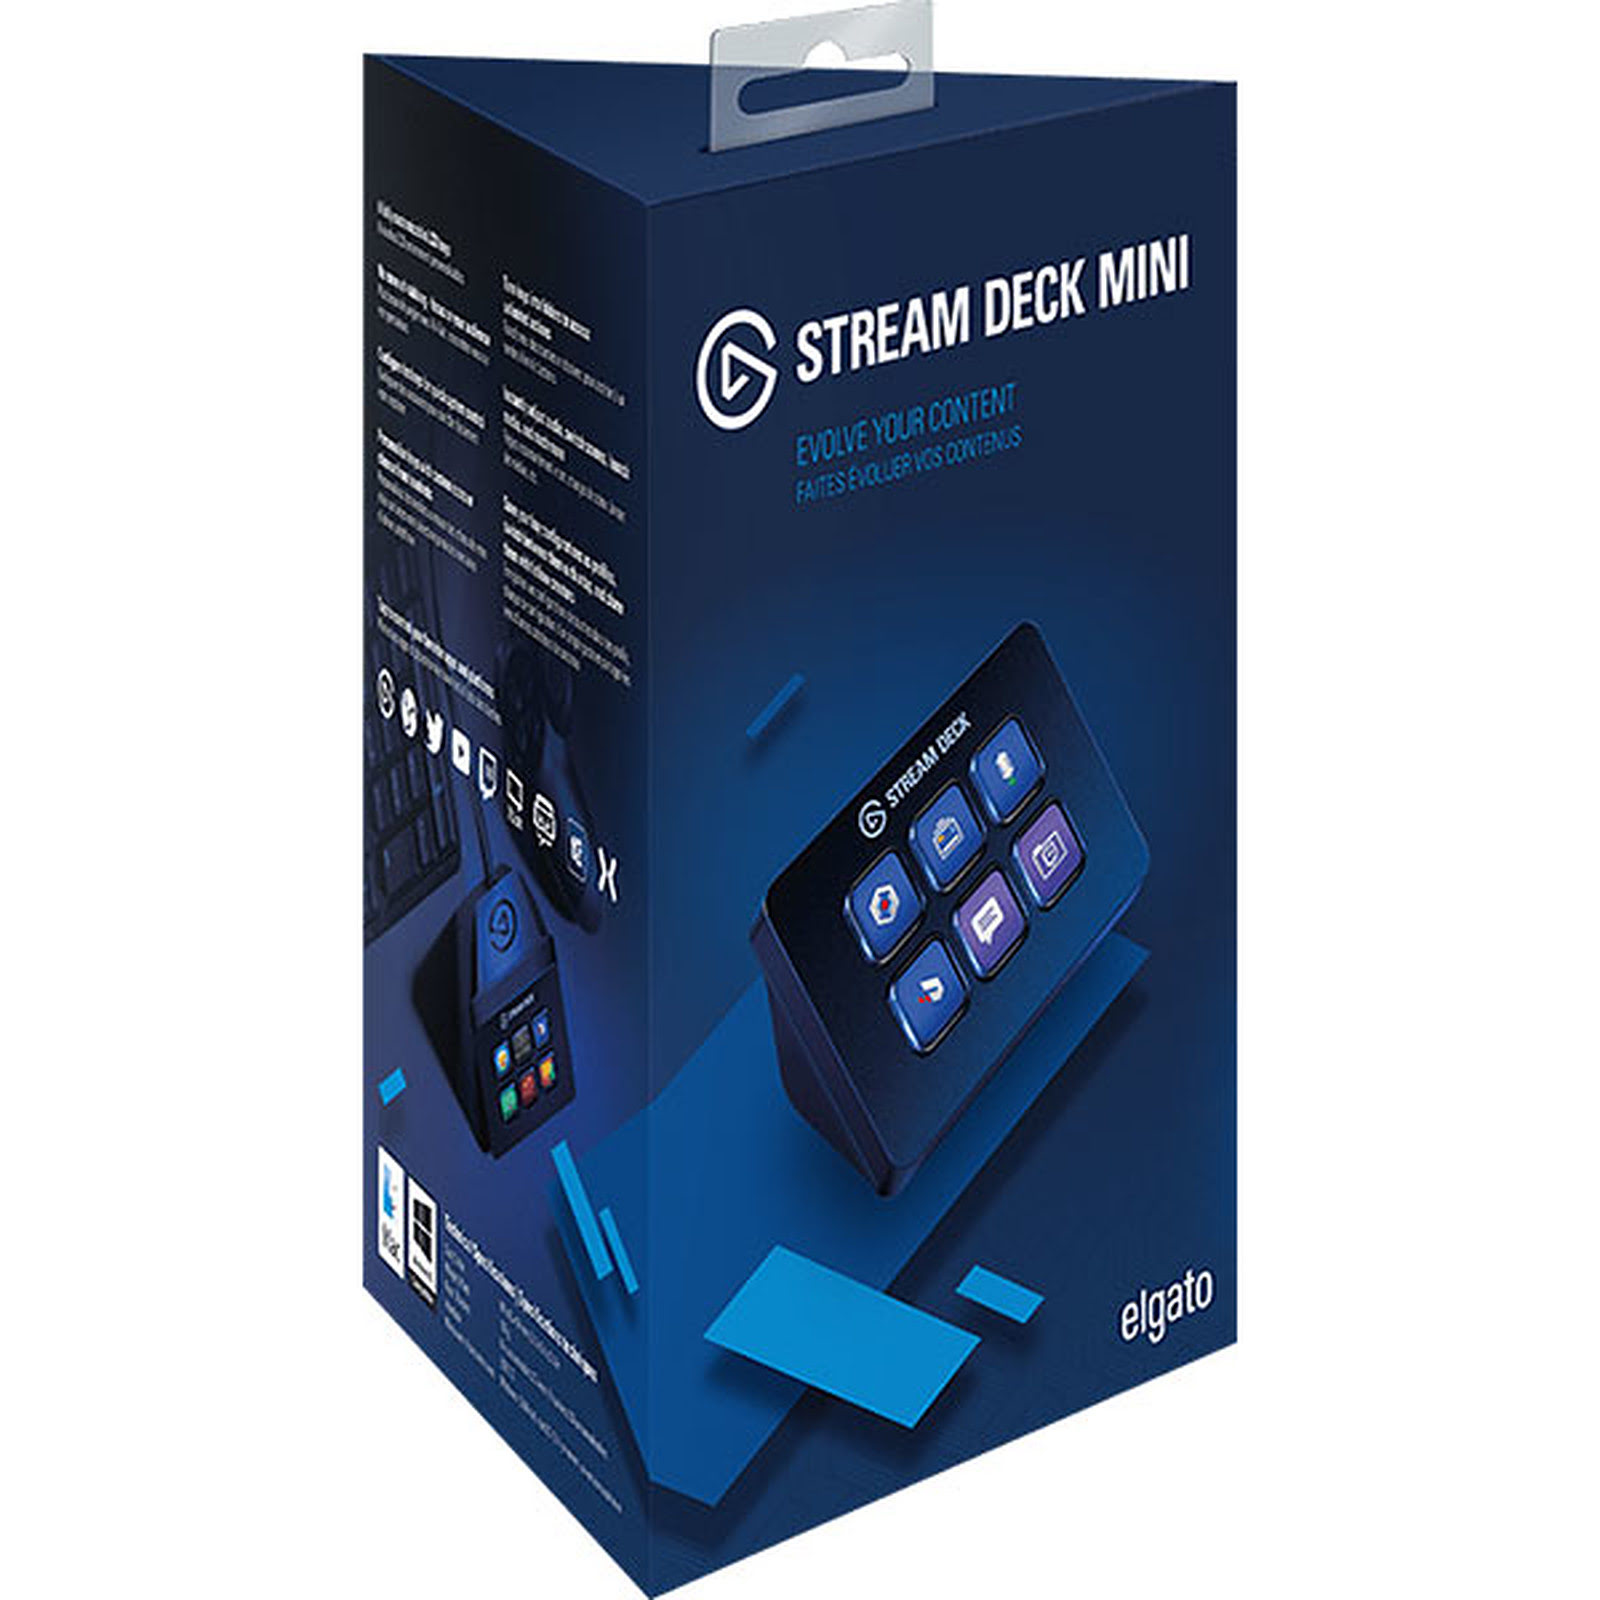 Stream Deck Mini (10GAI9901) - Achat / Vente Accessoire Streaming / Vlogging  sur Picata.fr - 1